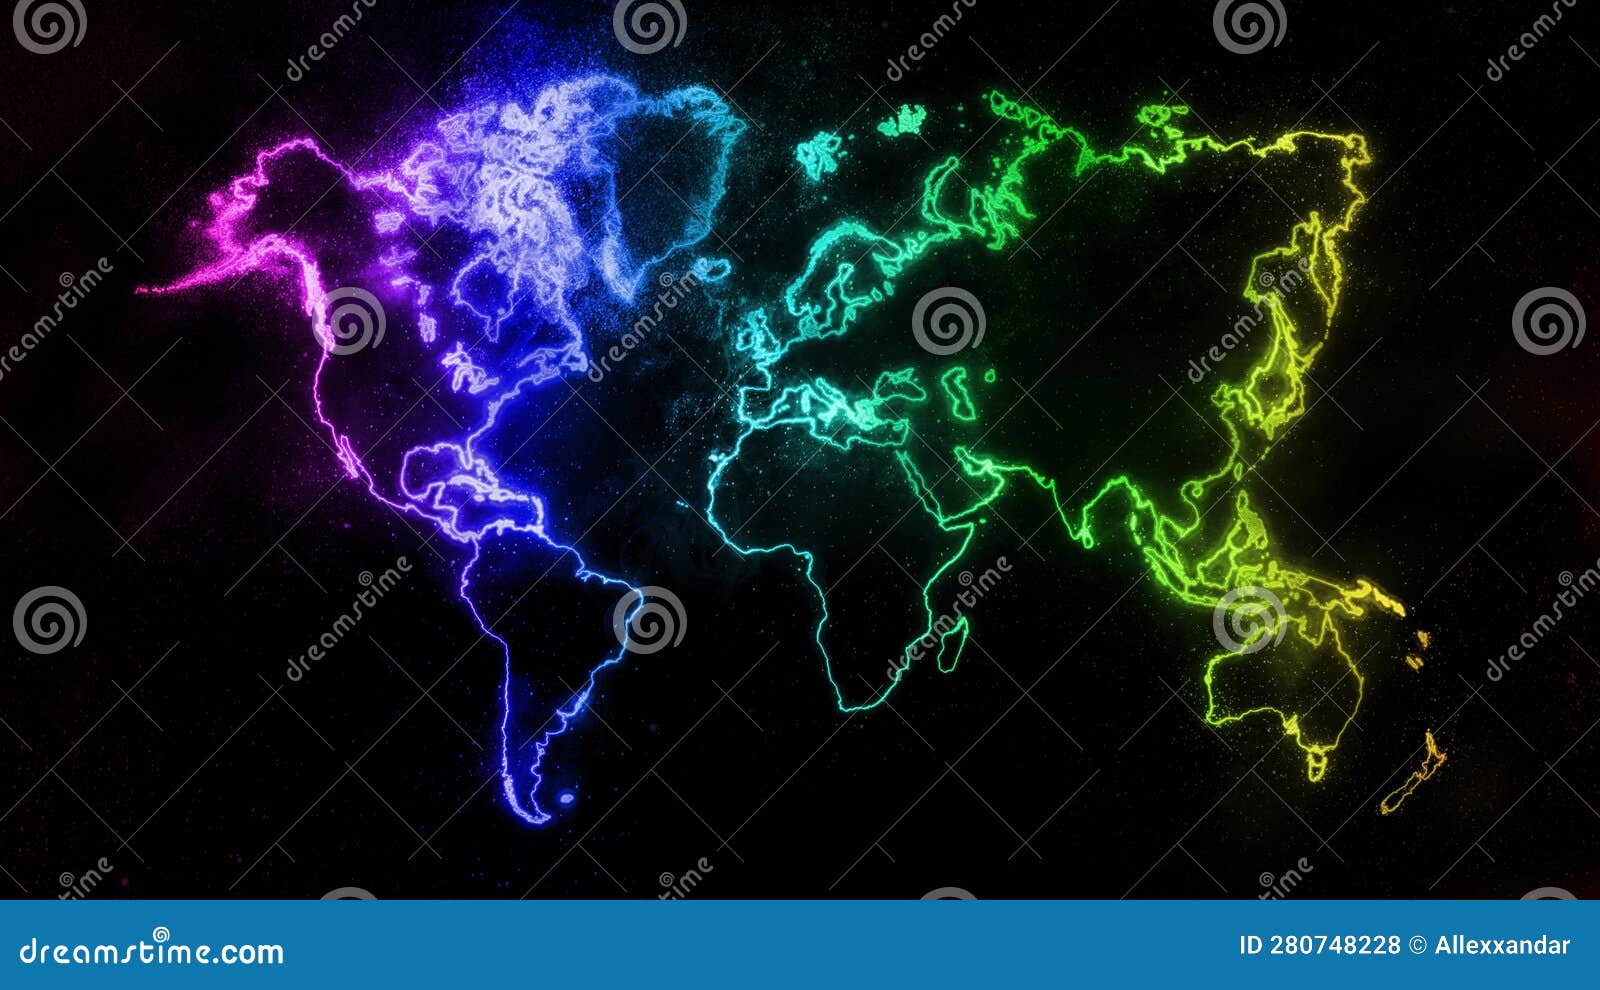 colorful worldÃÂ mapÃÂ on dark background, rainbowÃÂ glowing world map